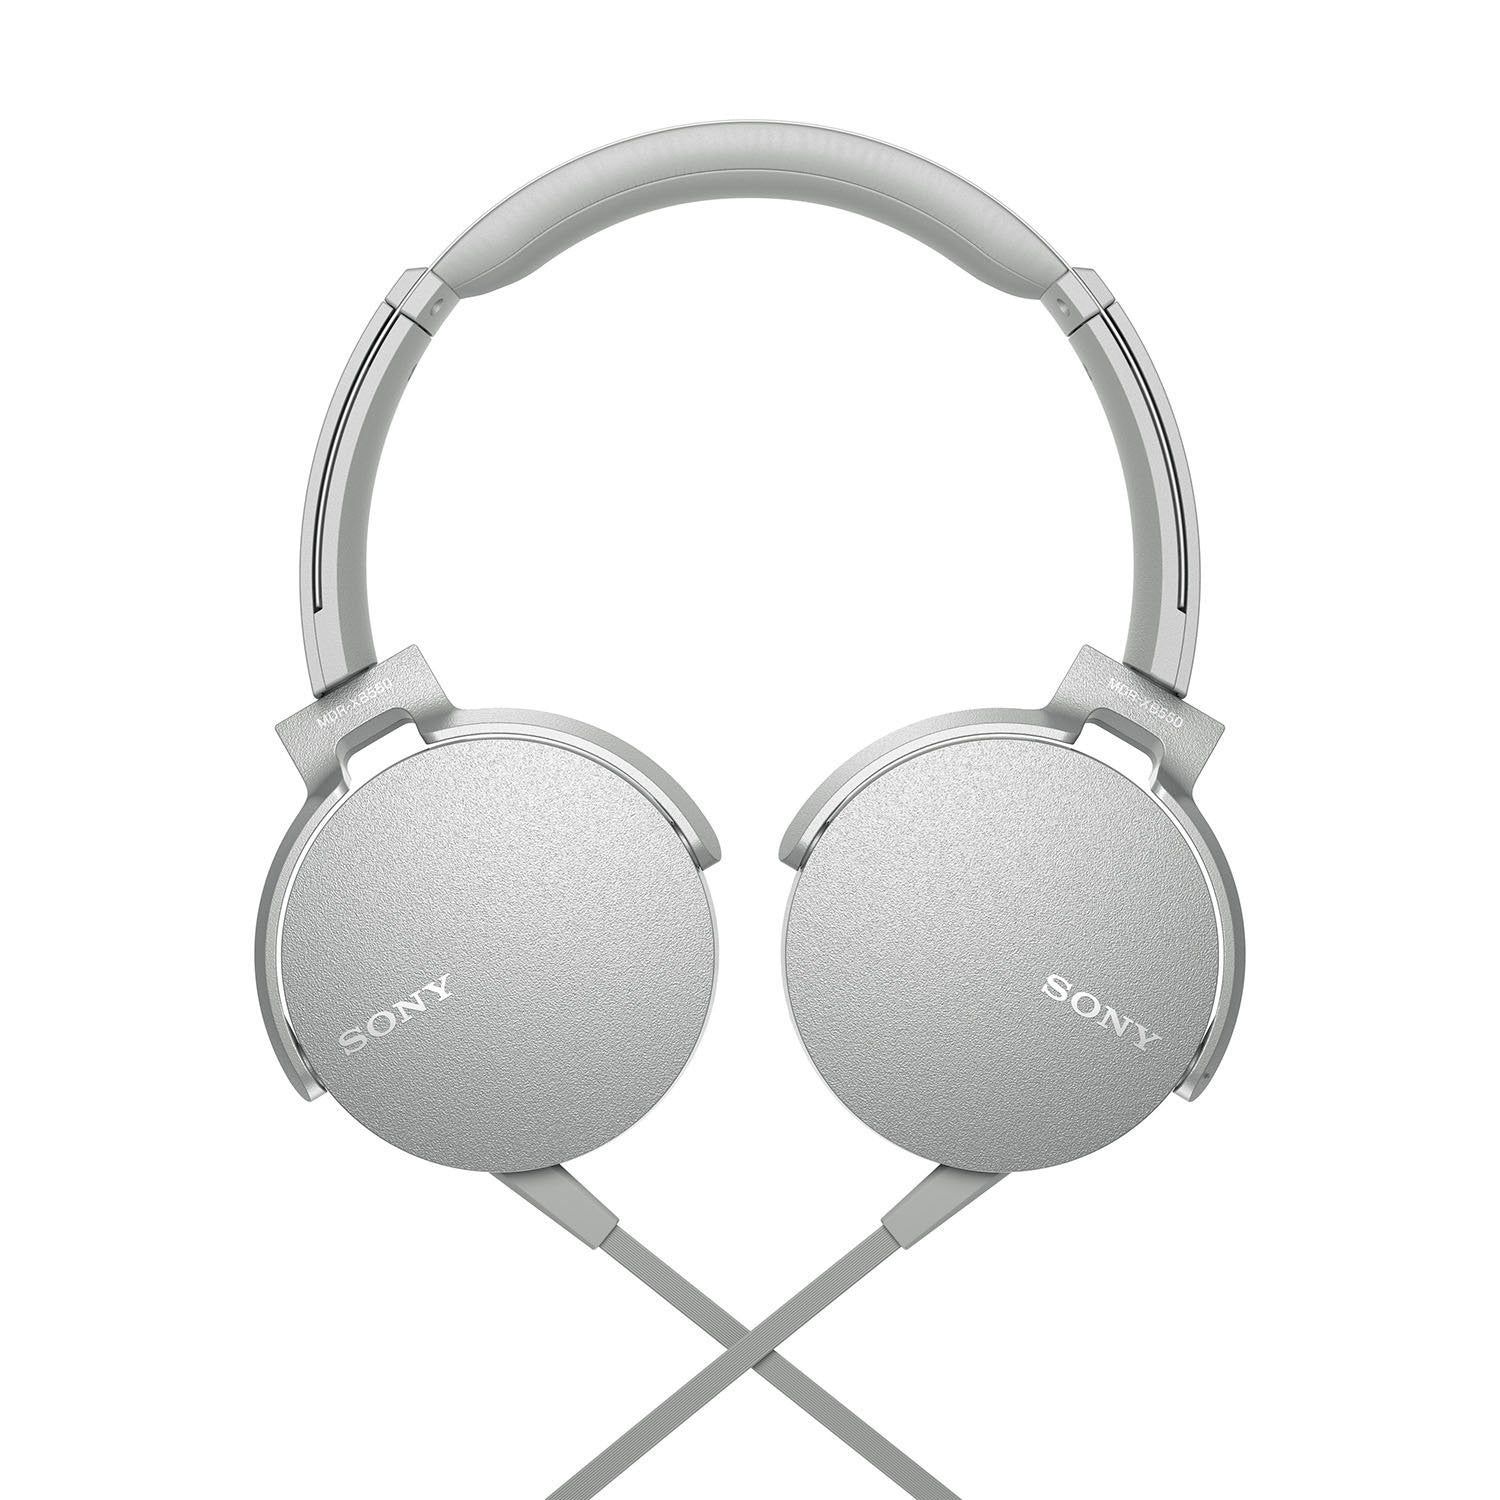 Sony bluetooth wireless headphone